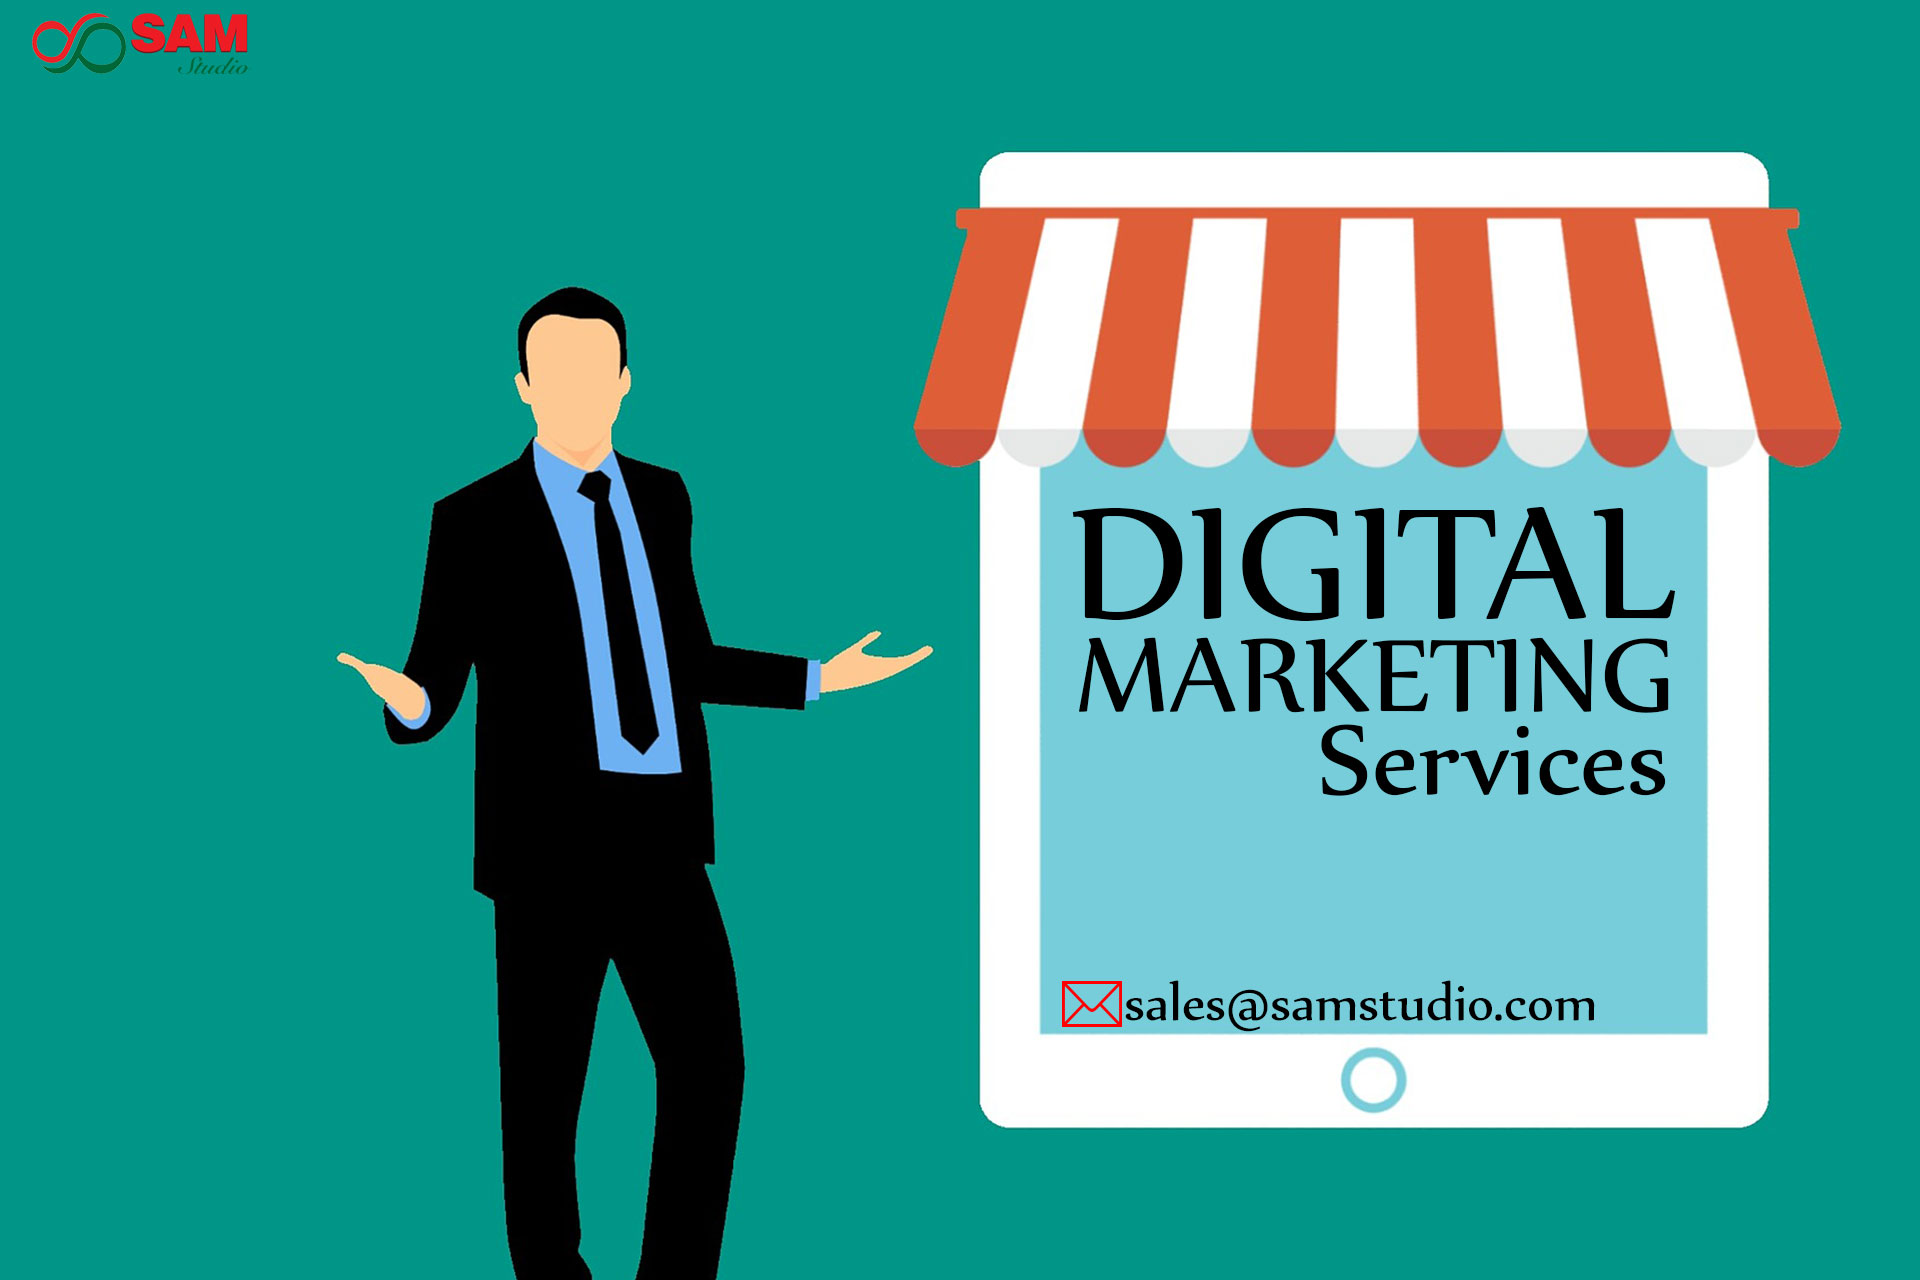 Digital Marketing Services | SEO, Social Media, PPC Marketing Services